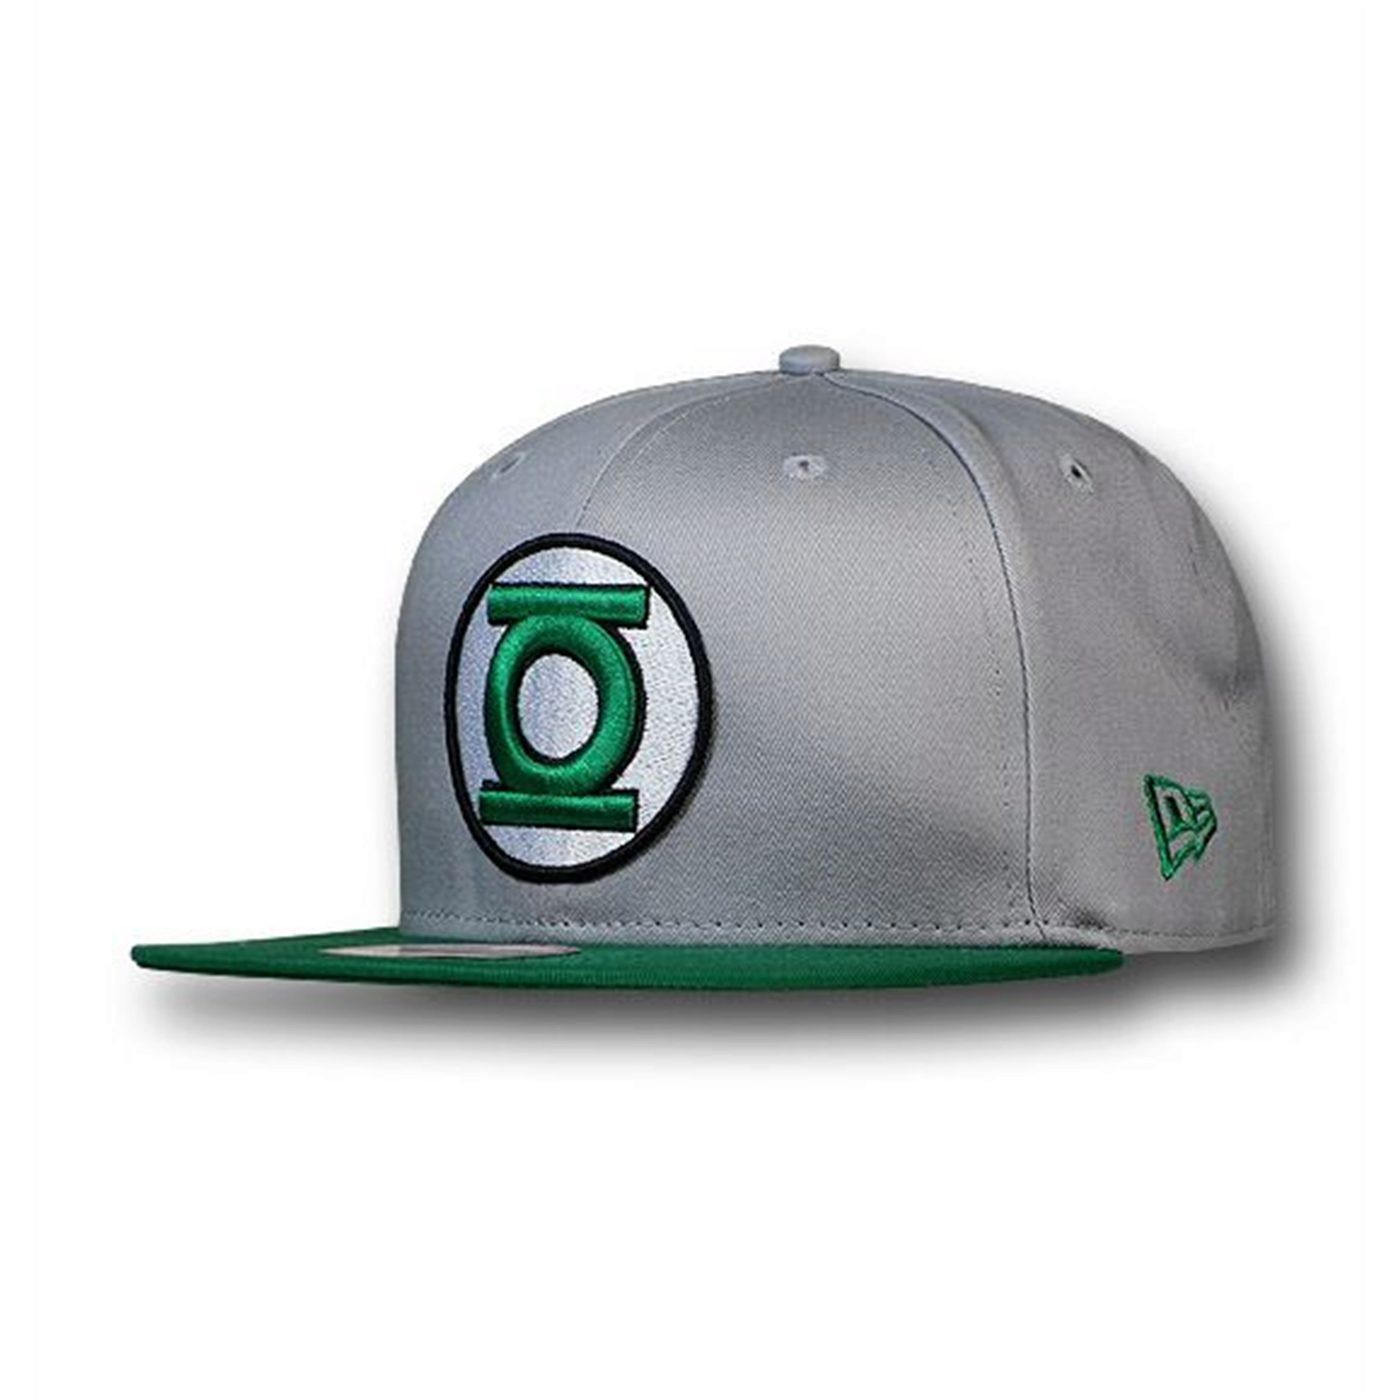 Green Lantern Grey 950 Snapback Cap